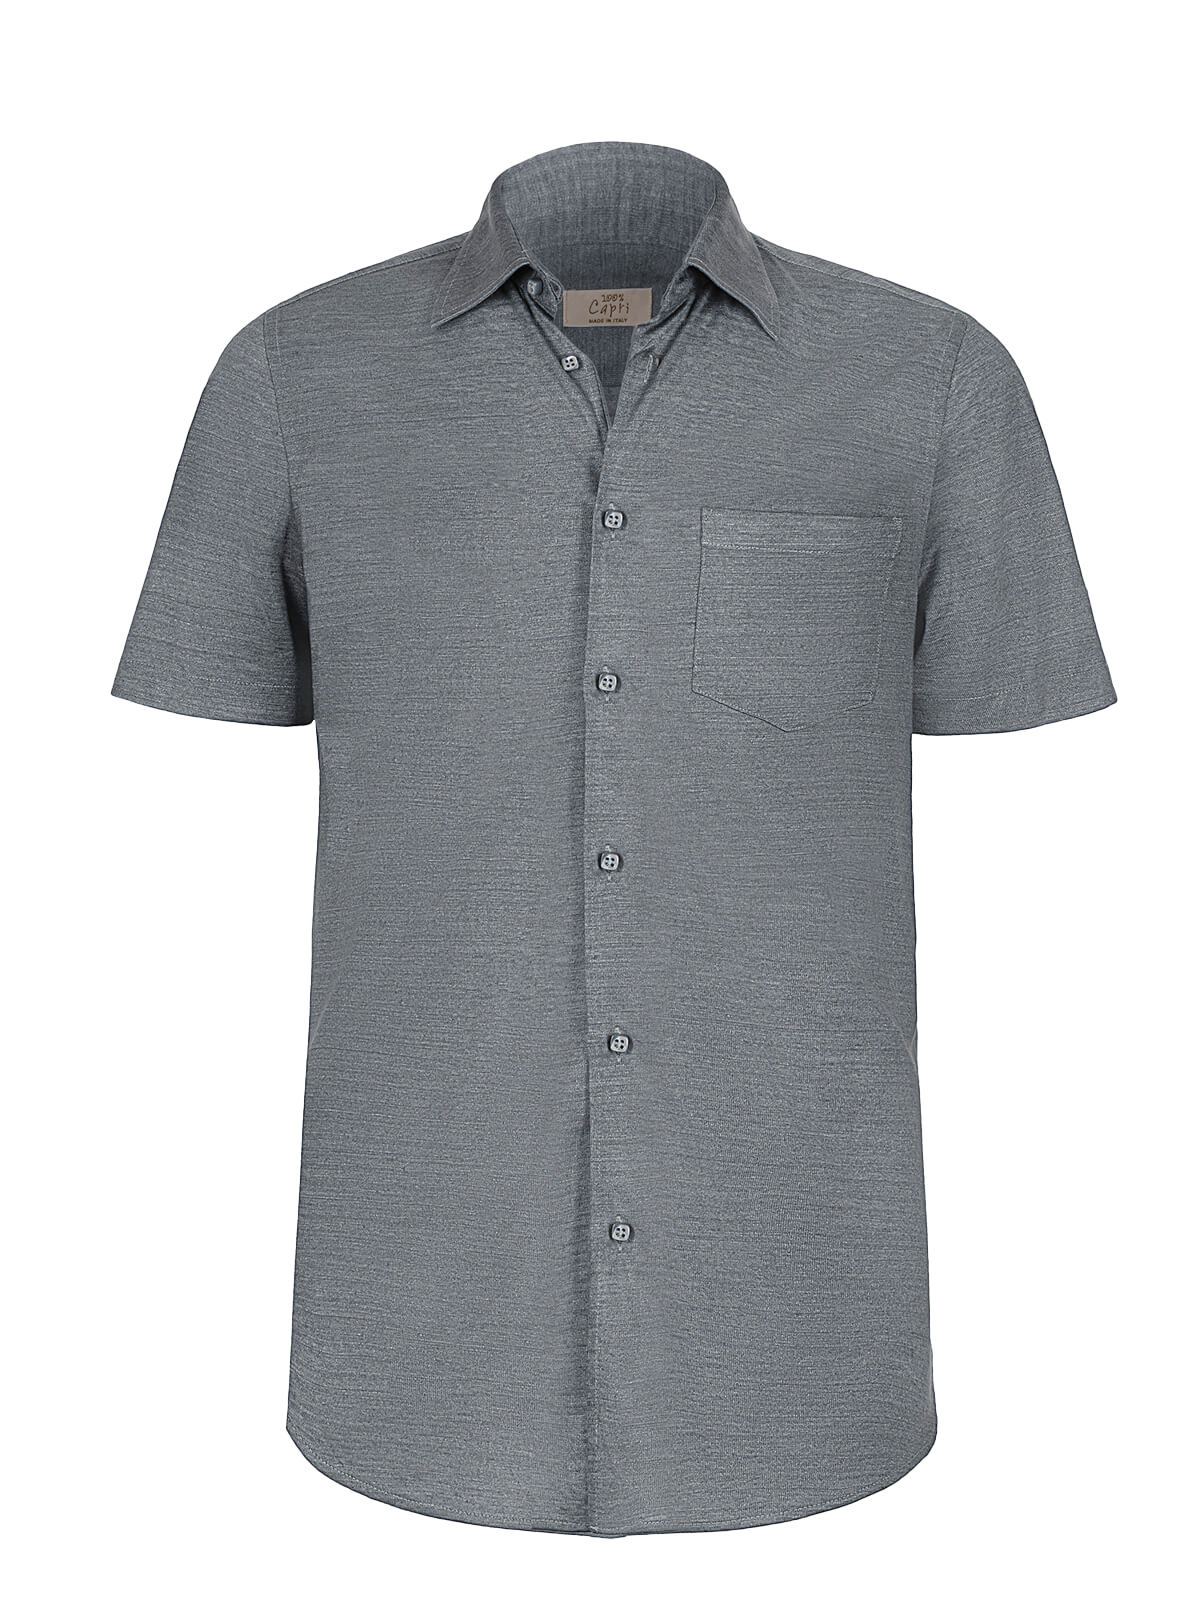 Camicia Short Sleeve 100% Capri dark grey linen shirt front